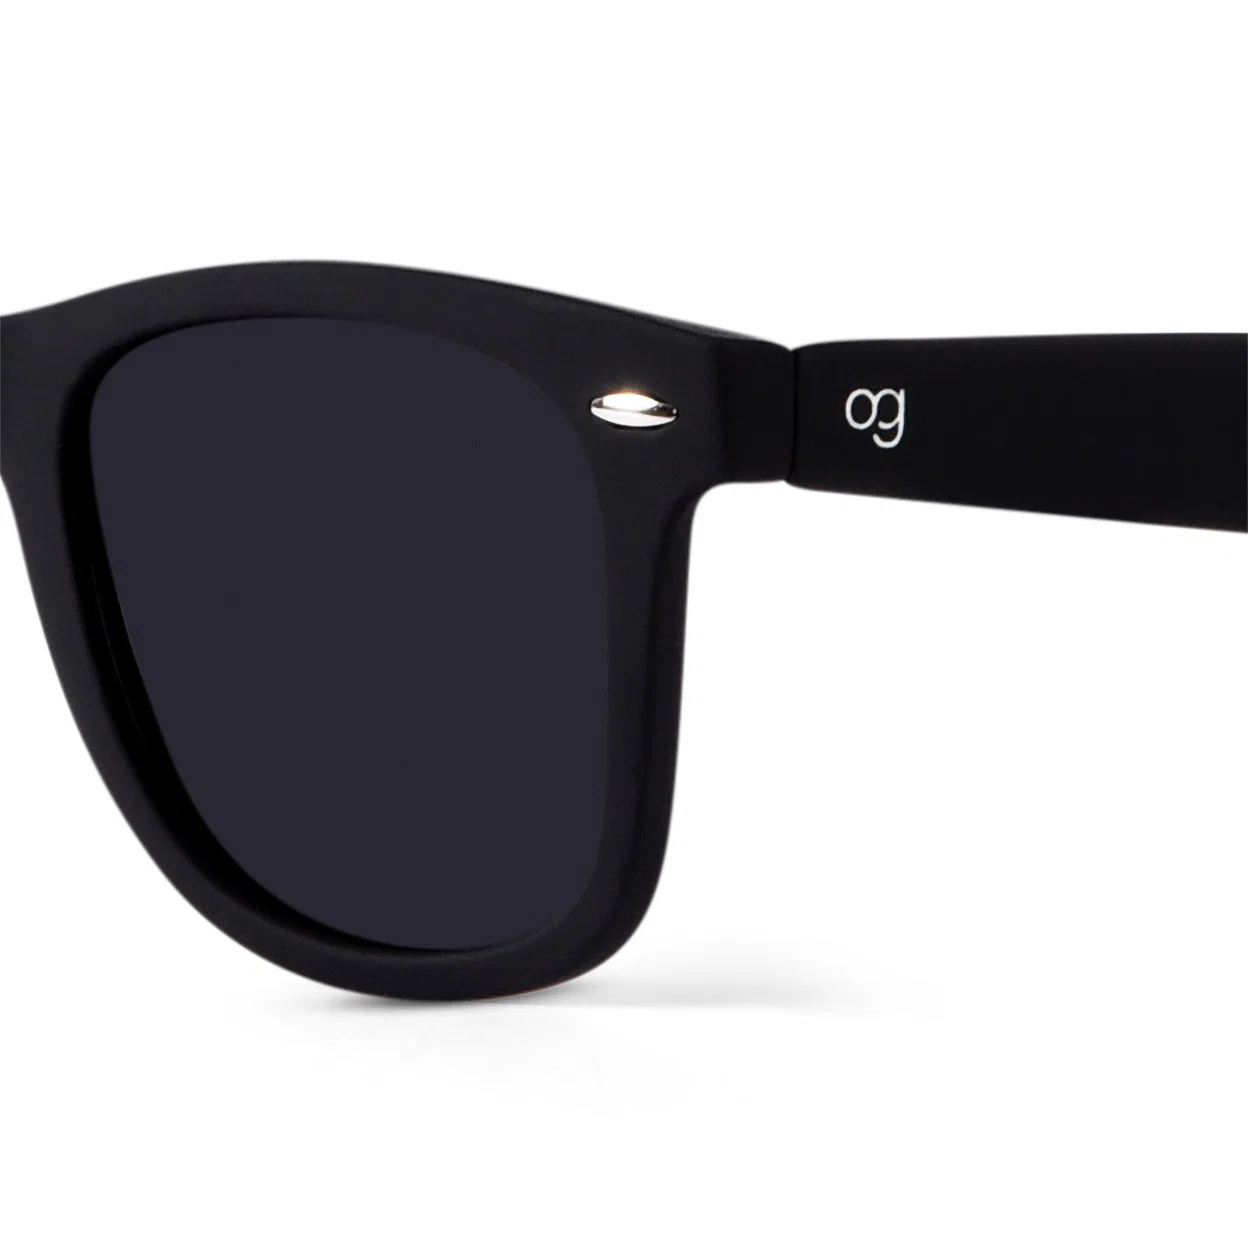 Buy Midnight Polarized Wayfarer Sunglasses - Woggles